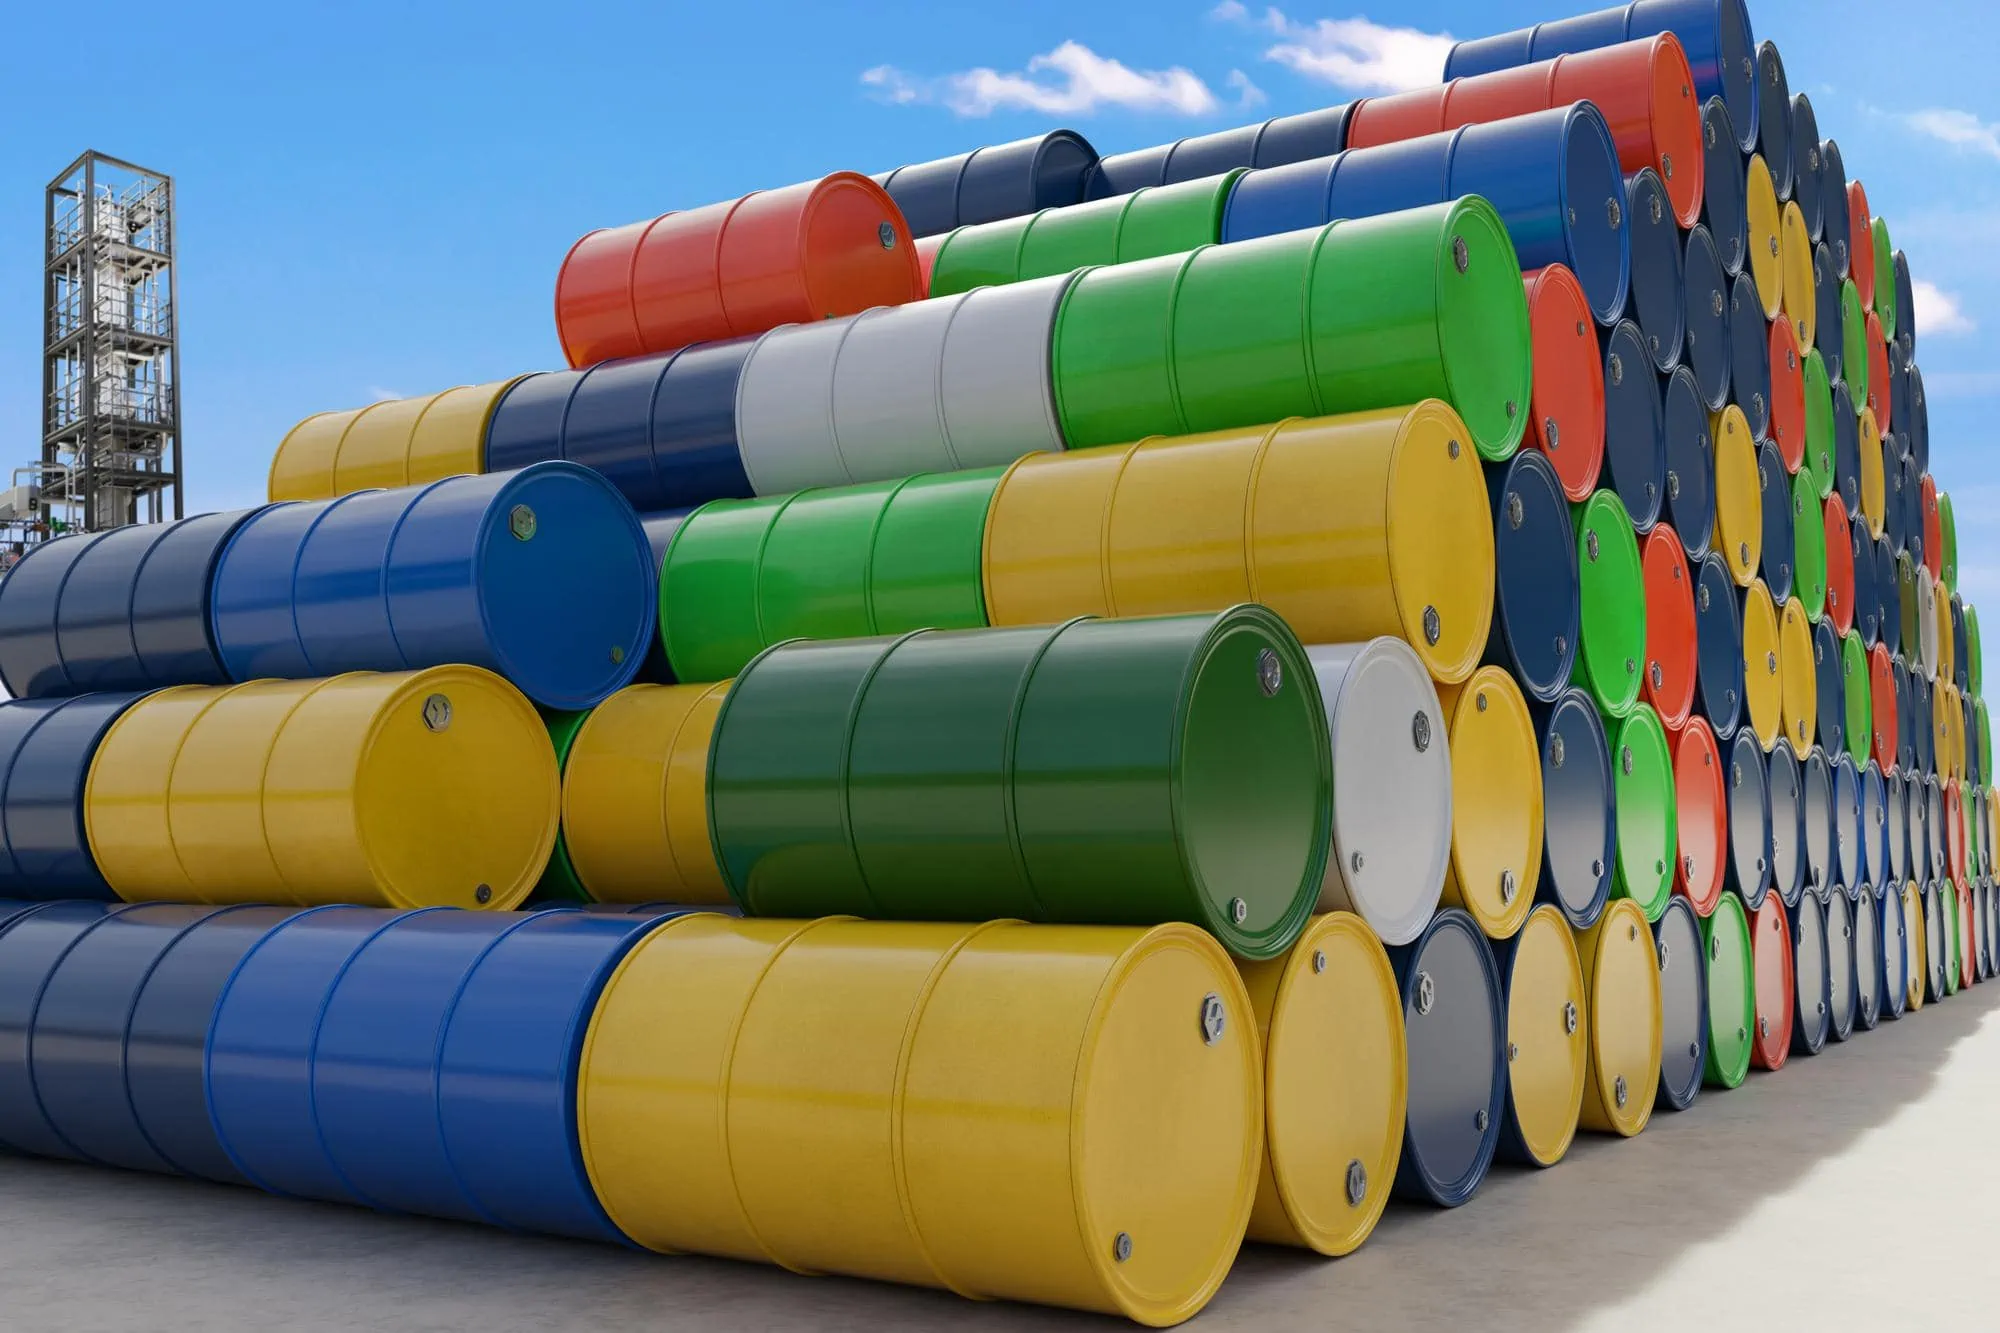 oil barrels chemical barrels are located base